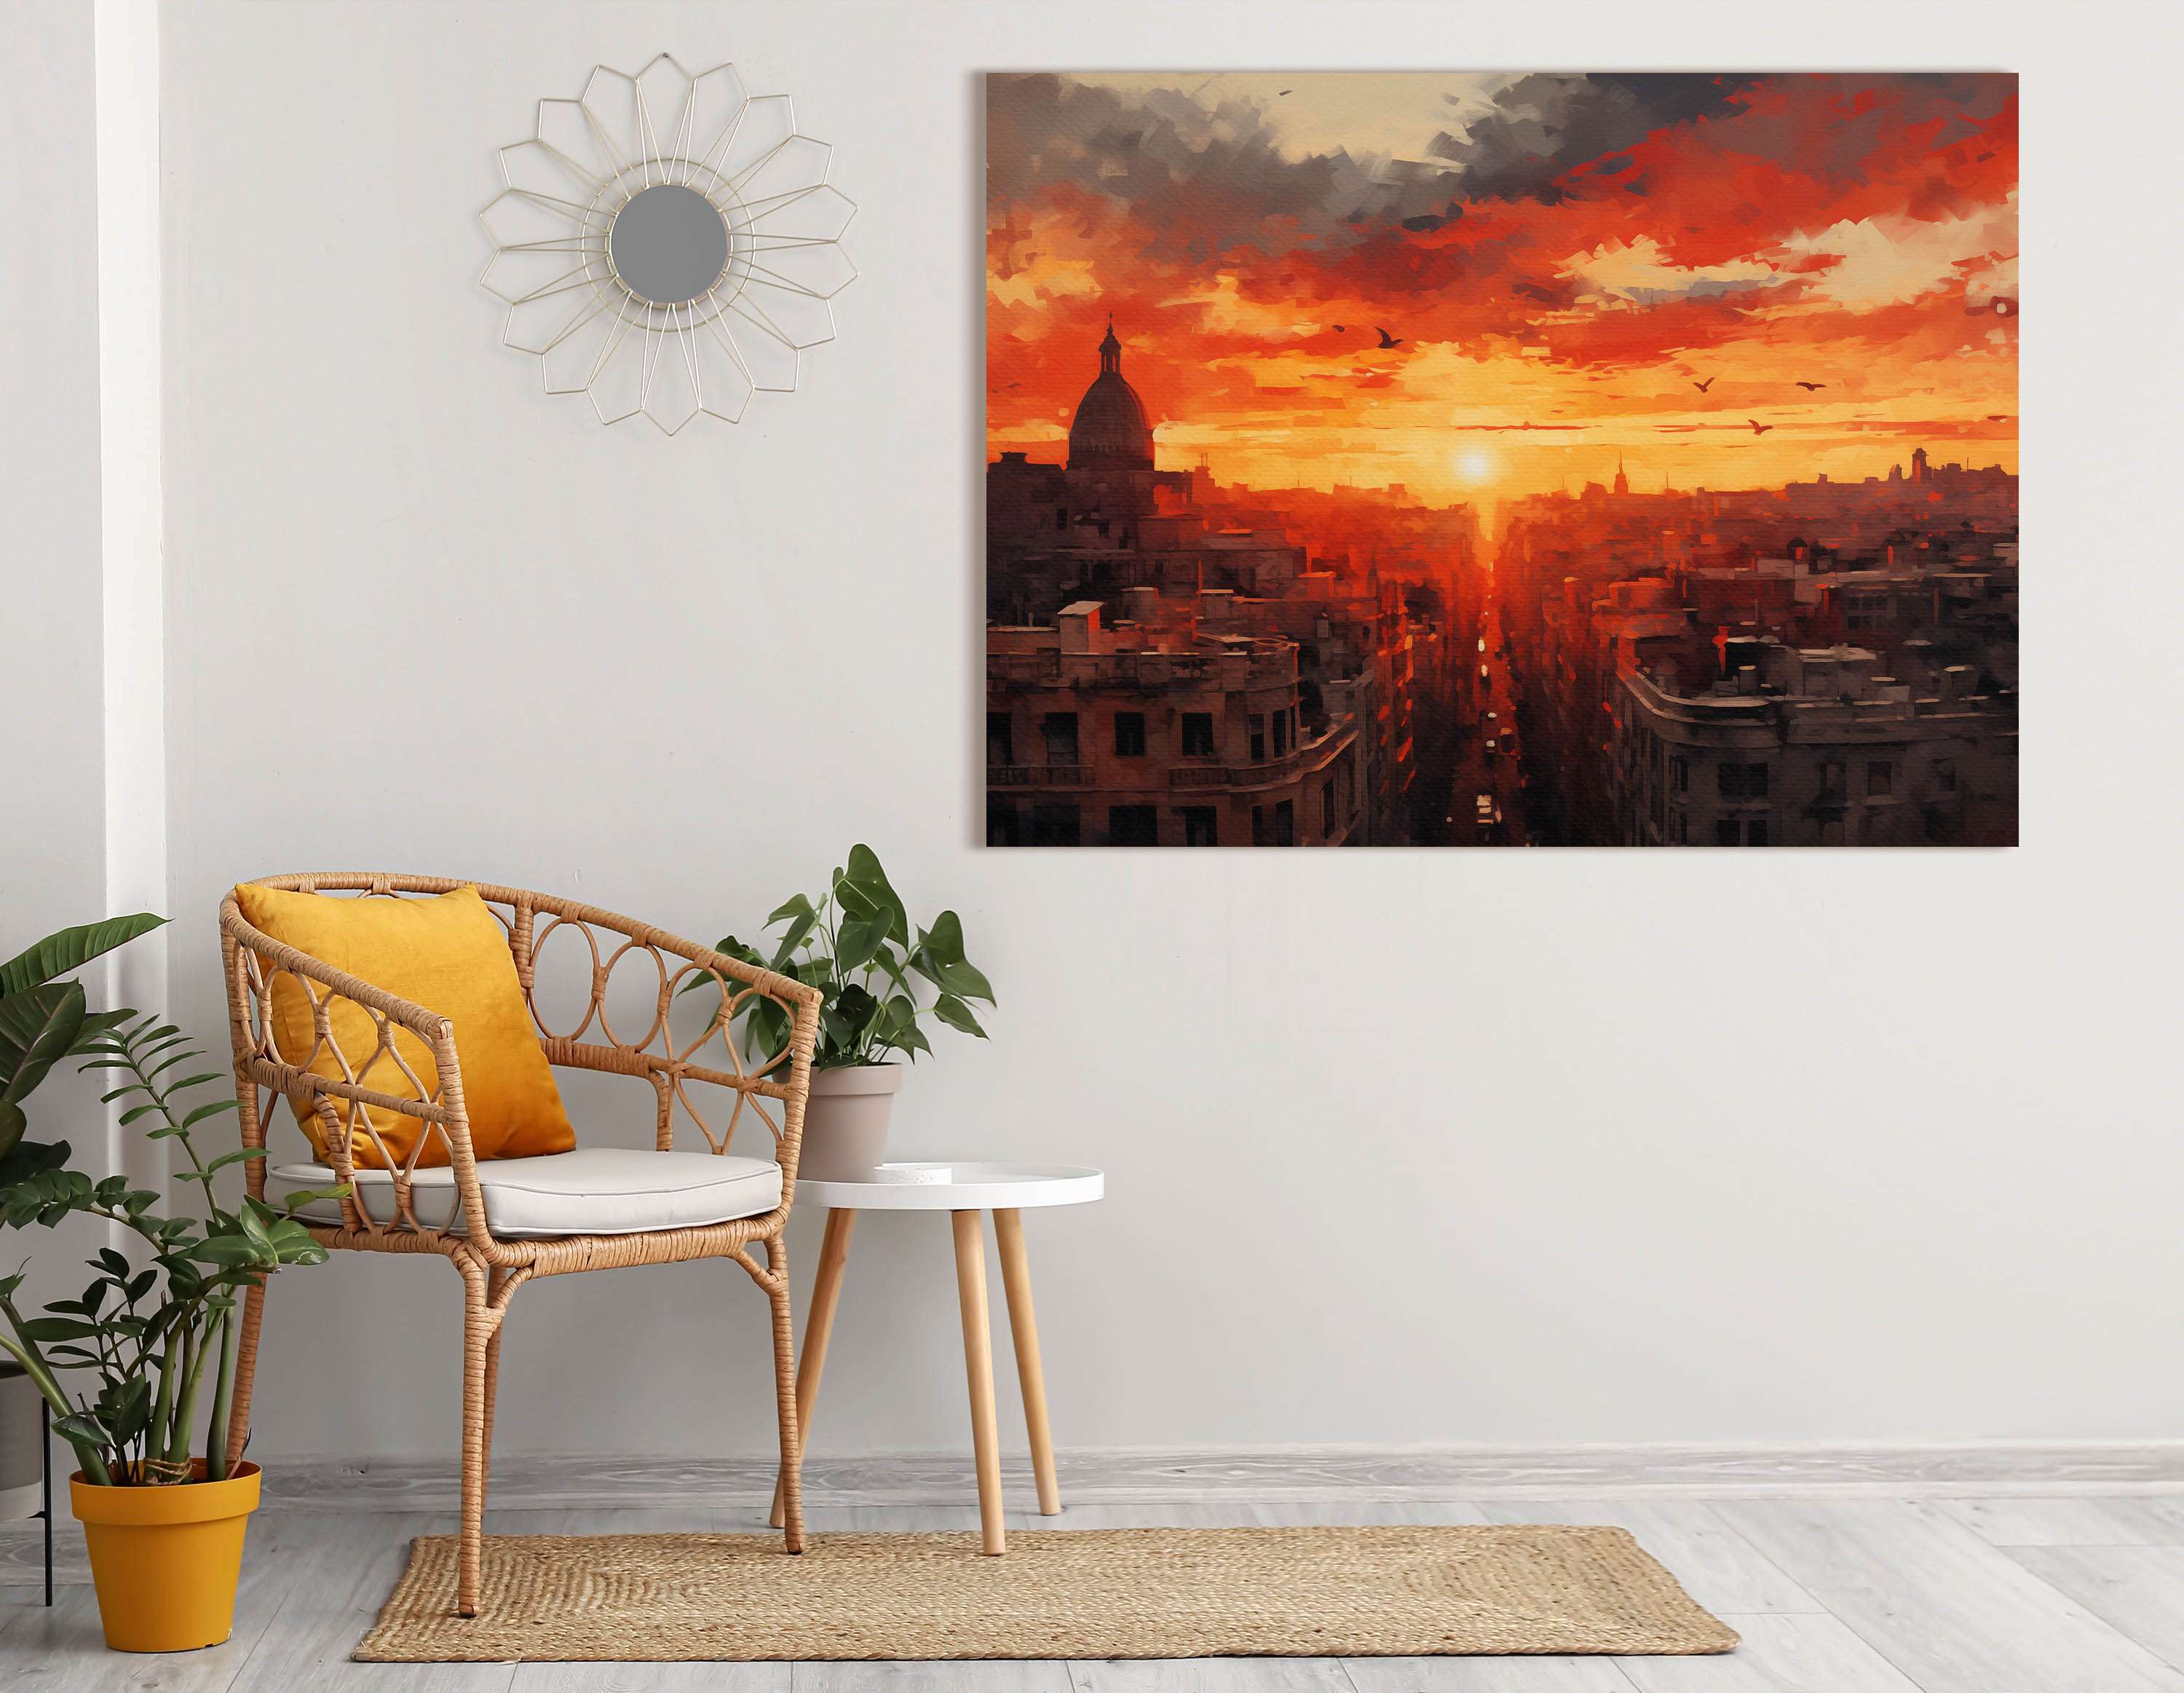 Warm Sunset Over Cityscape - Canvas Print - Artoholica Ready to Hang Canvas Print